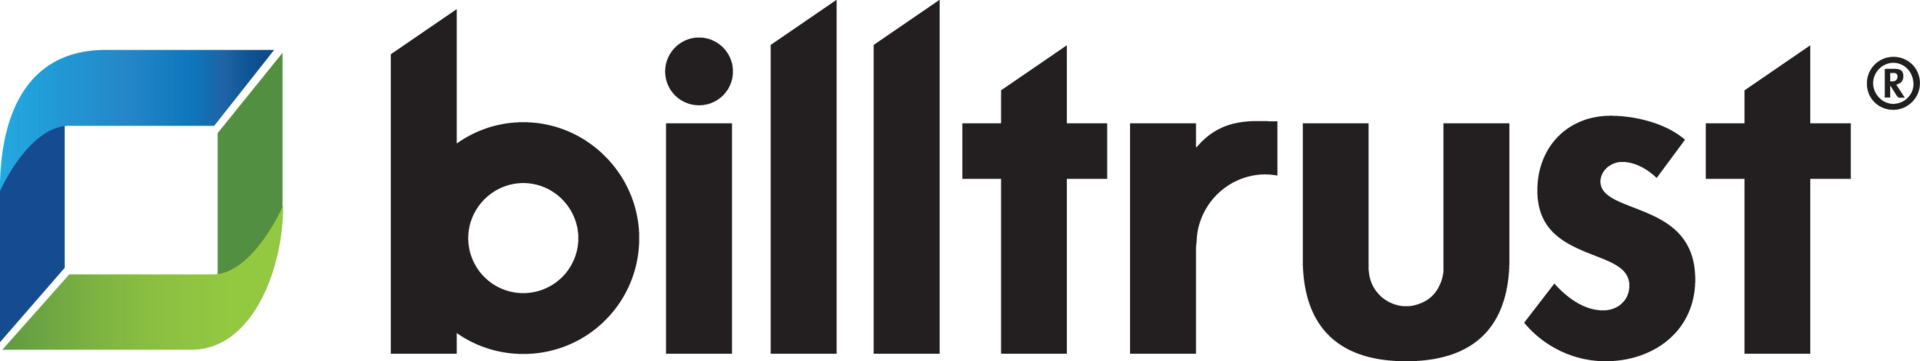 Billtrust-logo-full-color[1]